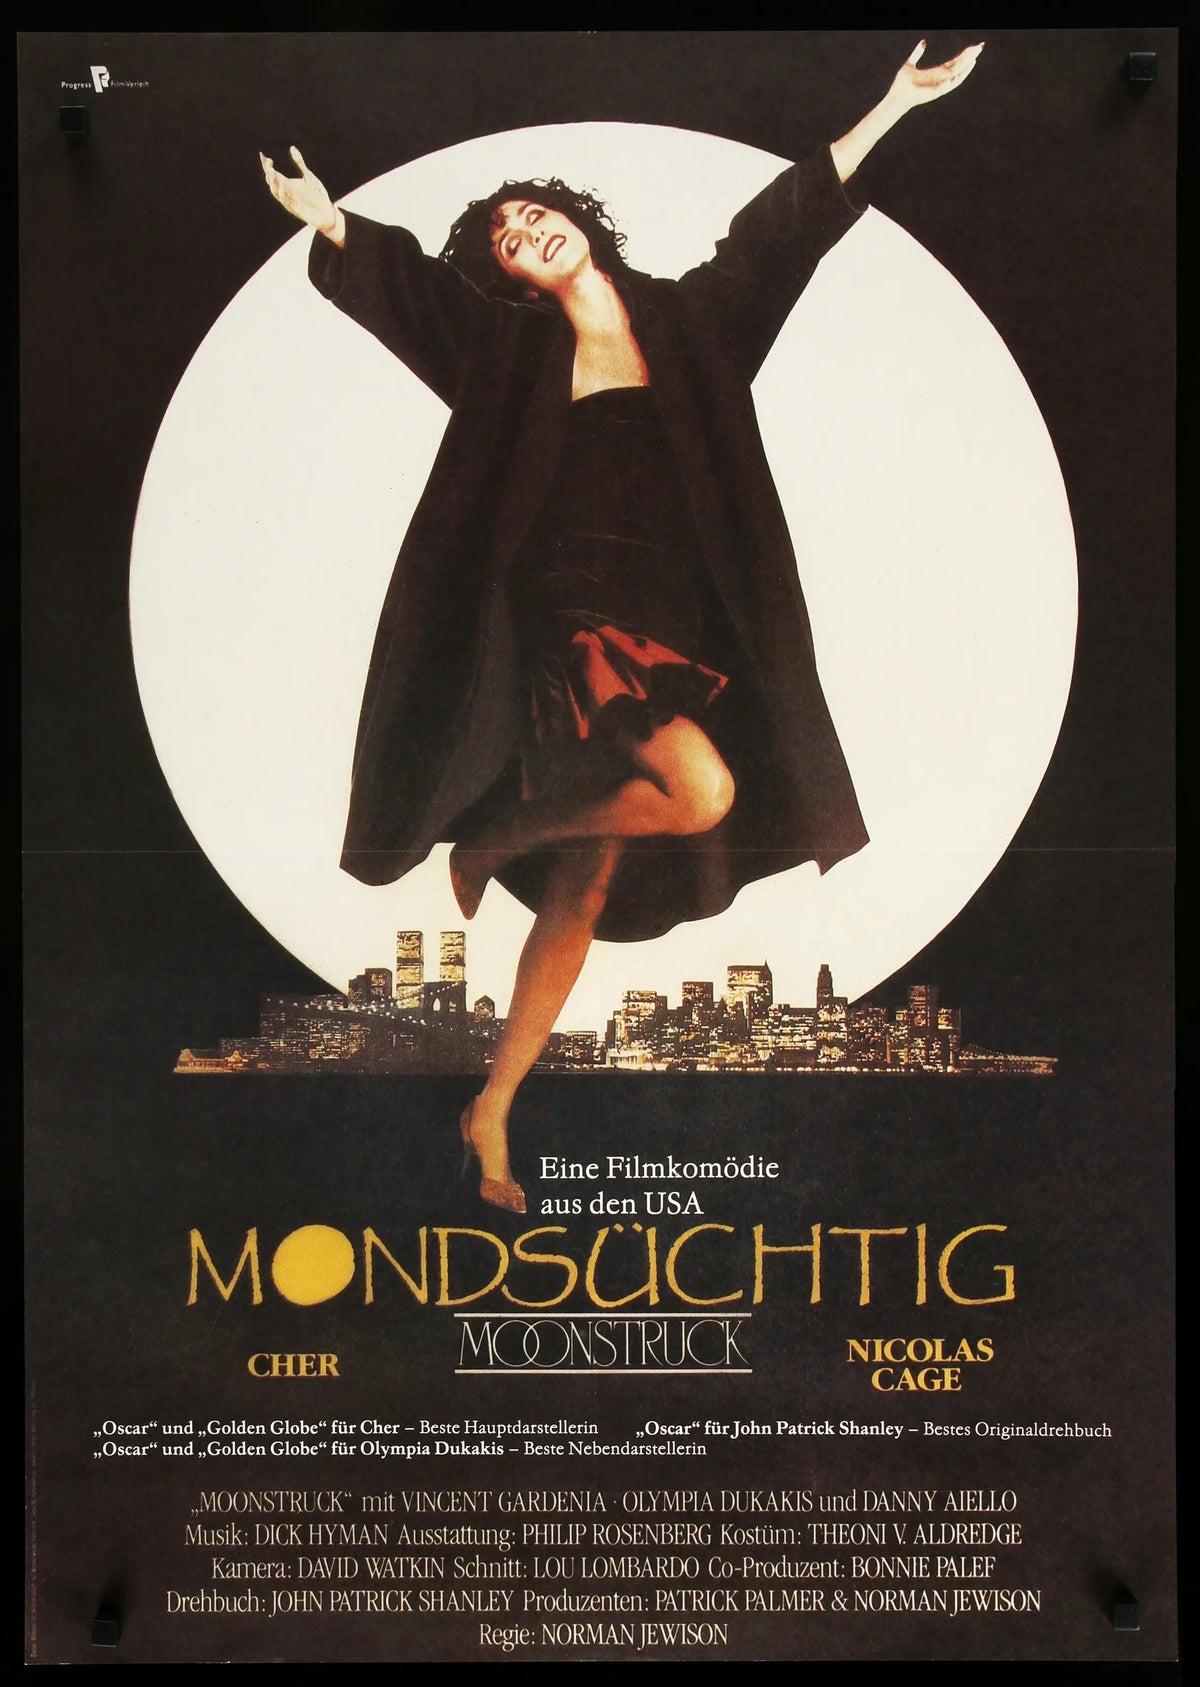 Moonstruck (1987) original movie poster for sale at Original Film Art